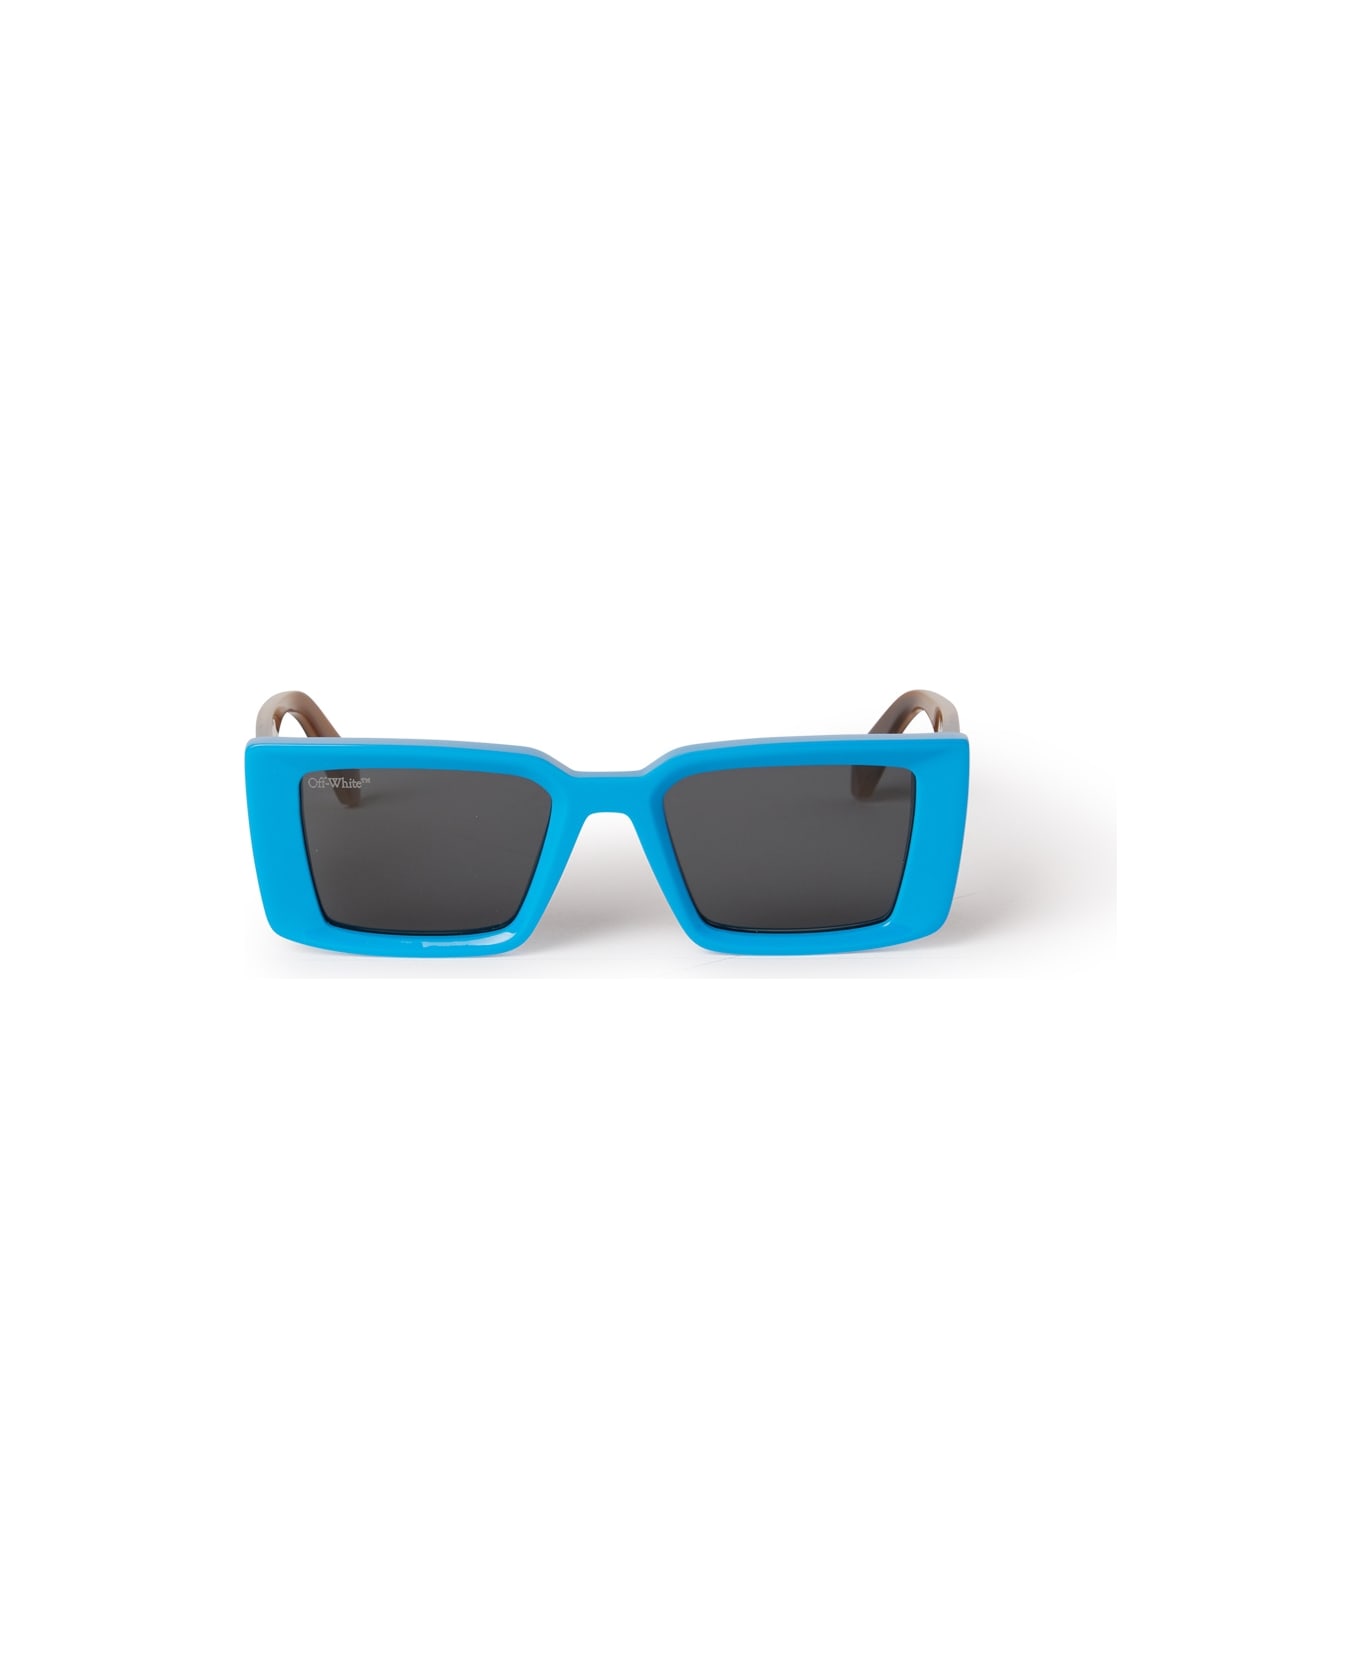 Off-White SAVANNAH SUNGLASSES tinted BLUE DARK  Sunglasses tinted - Blue